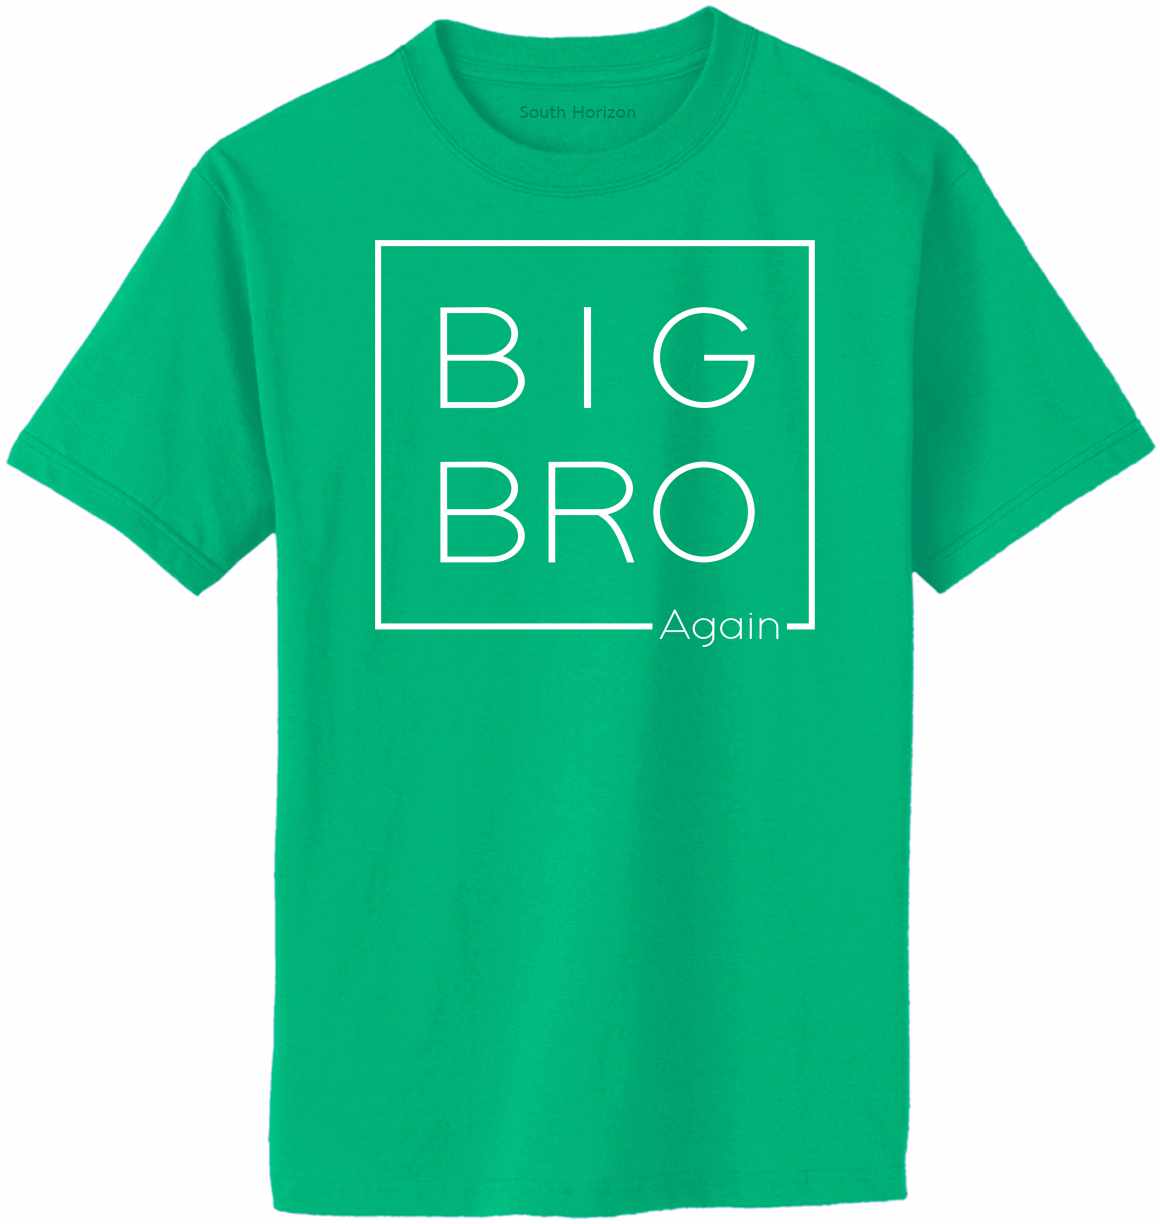 Big Bro Again- Big Brother Box on Adult T-Shirt (#1311-1)